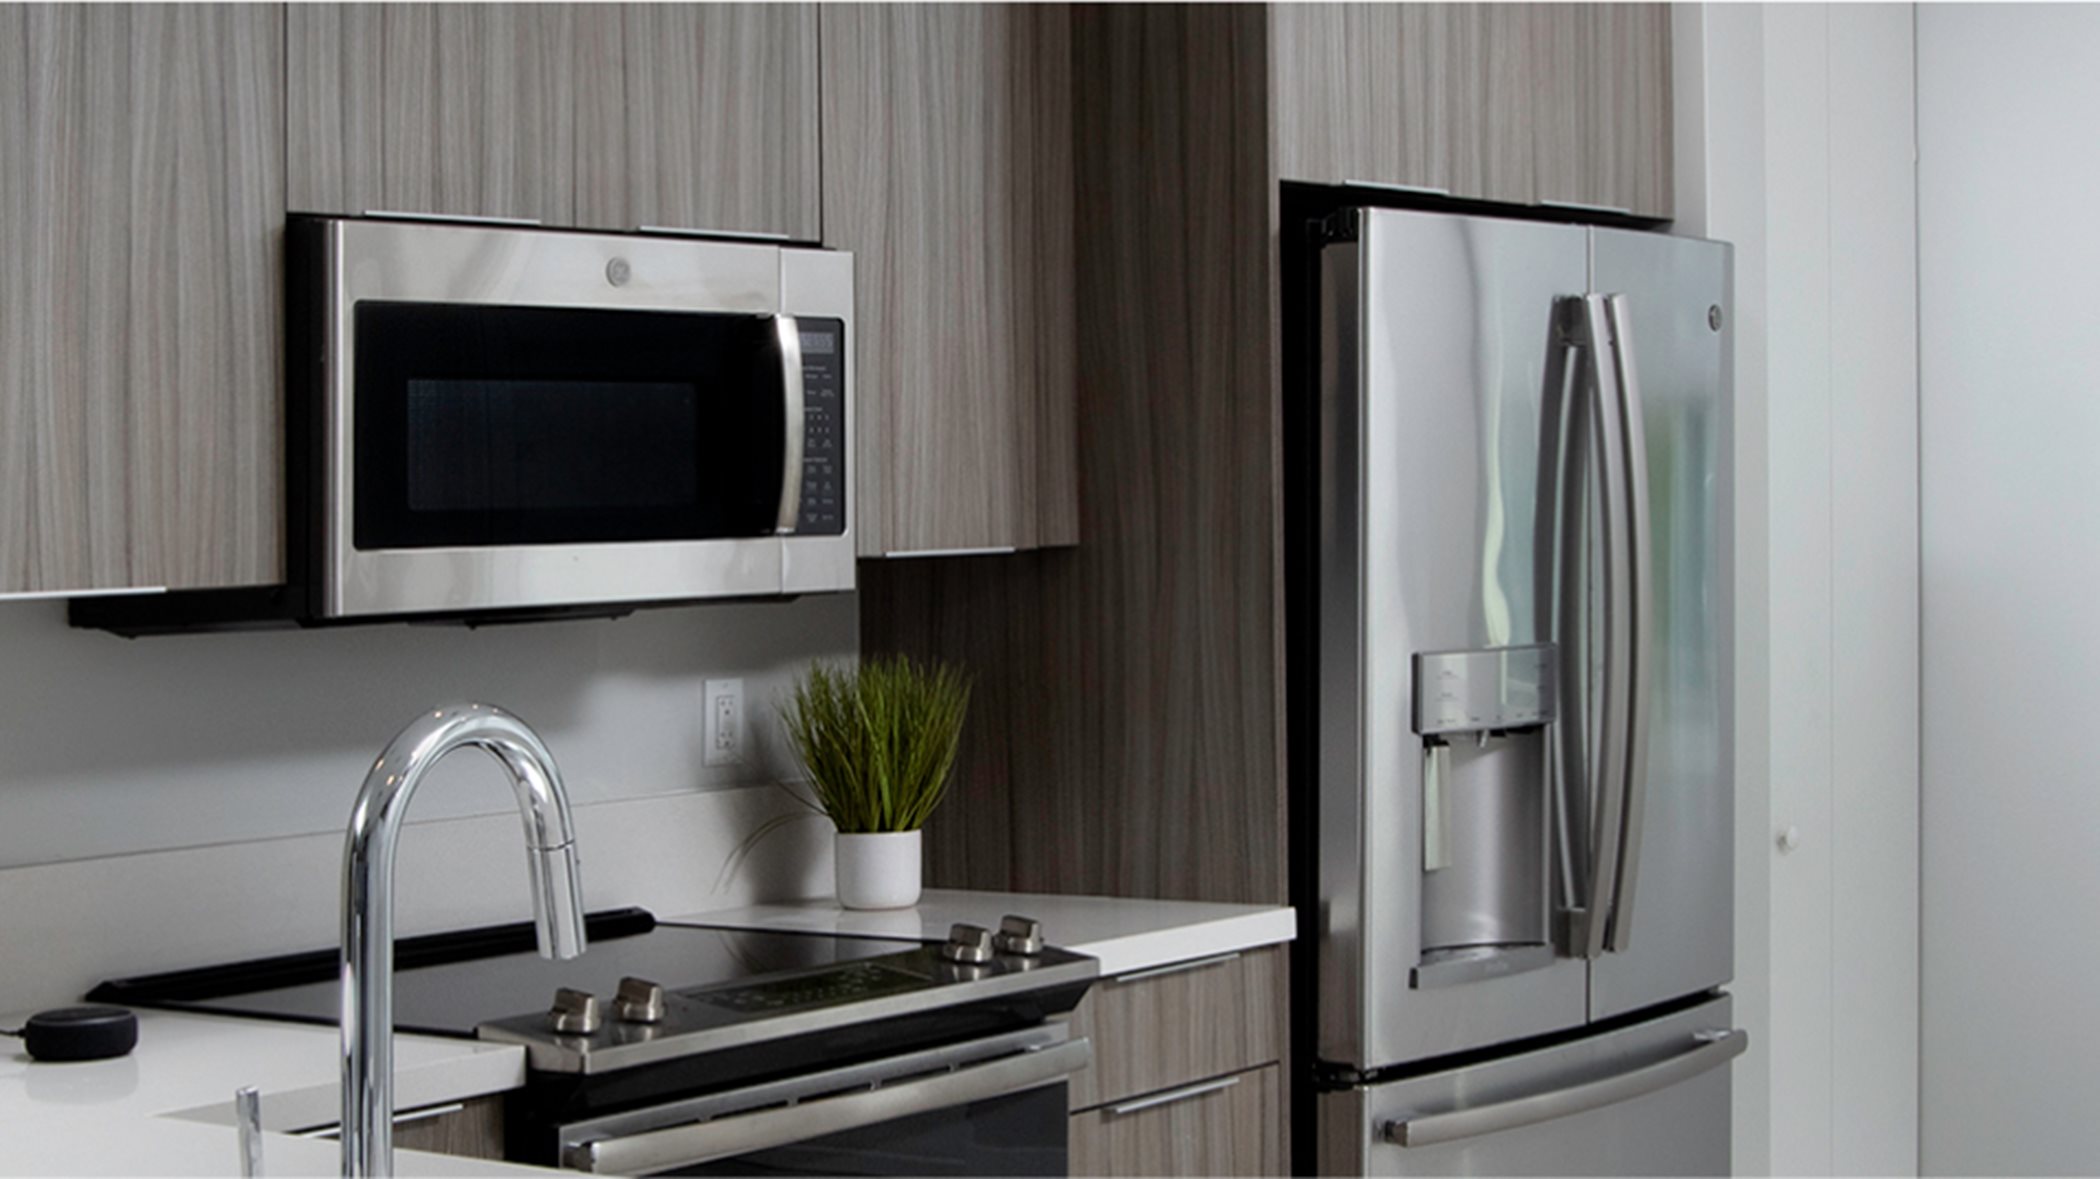 Landmark Condominiums Model E Kitchen Appliances